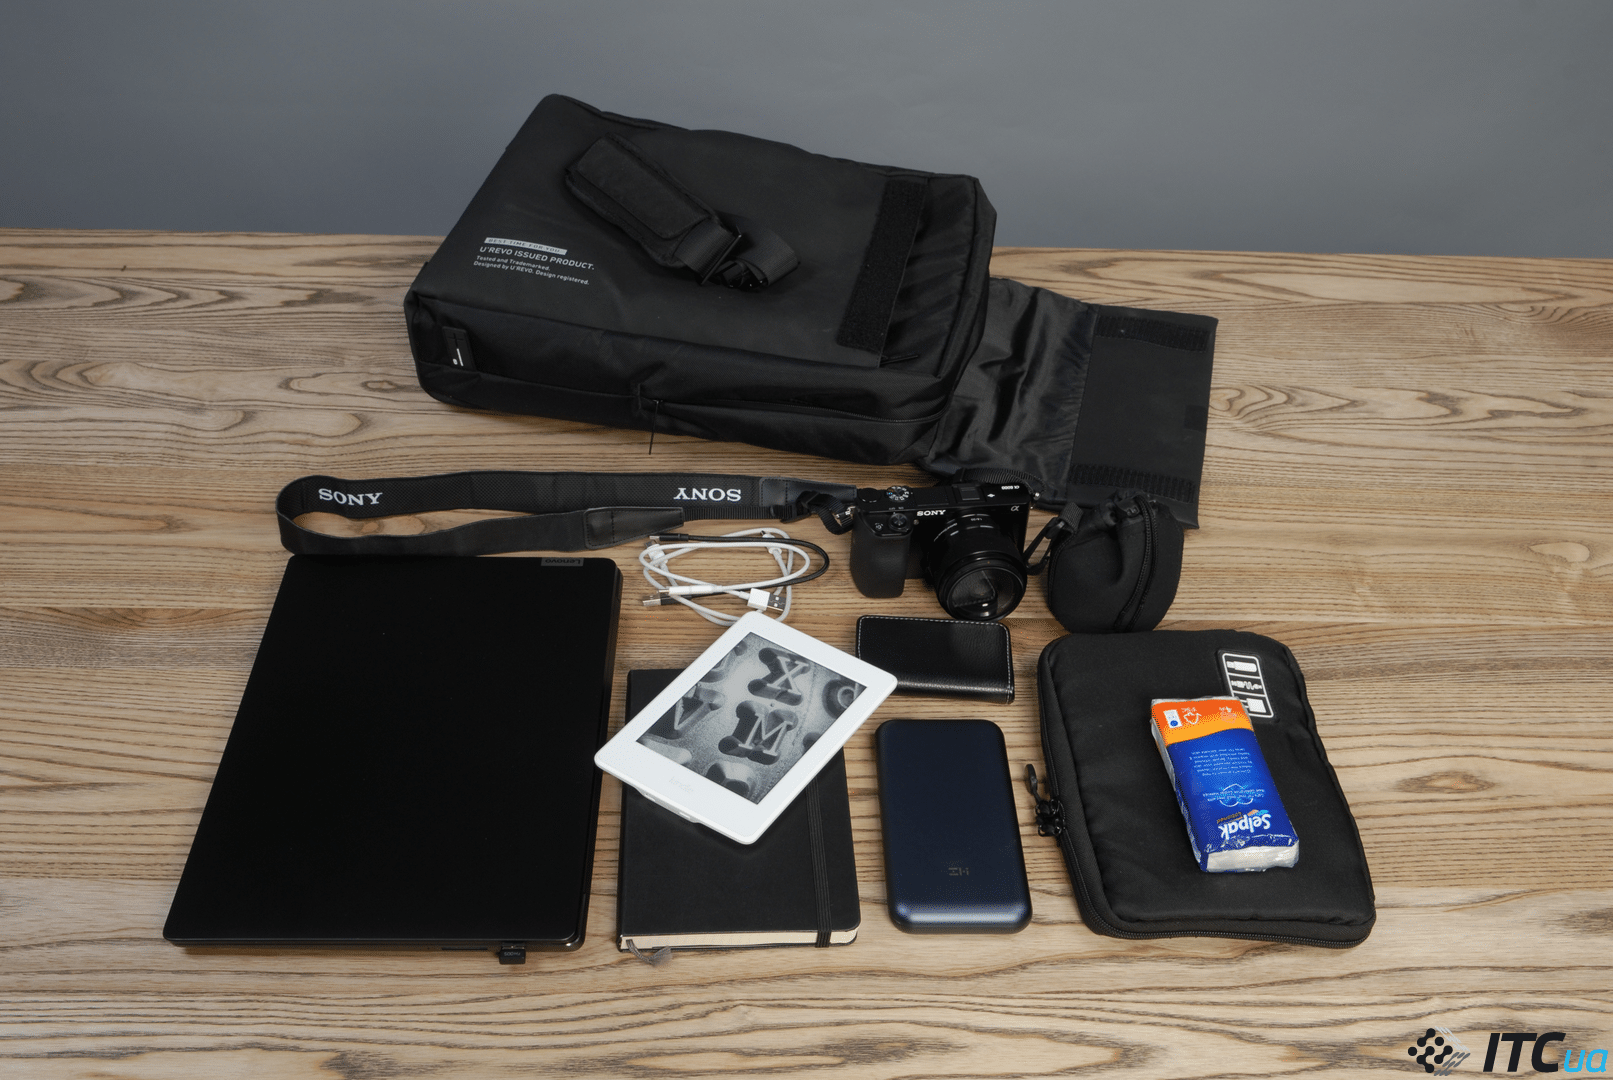 Обзор сумки-рюкзака Xiaomi U’revo City Business Multifunction Bag